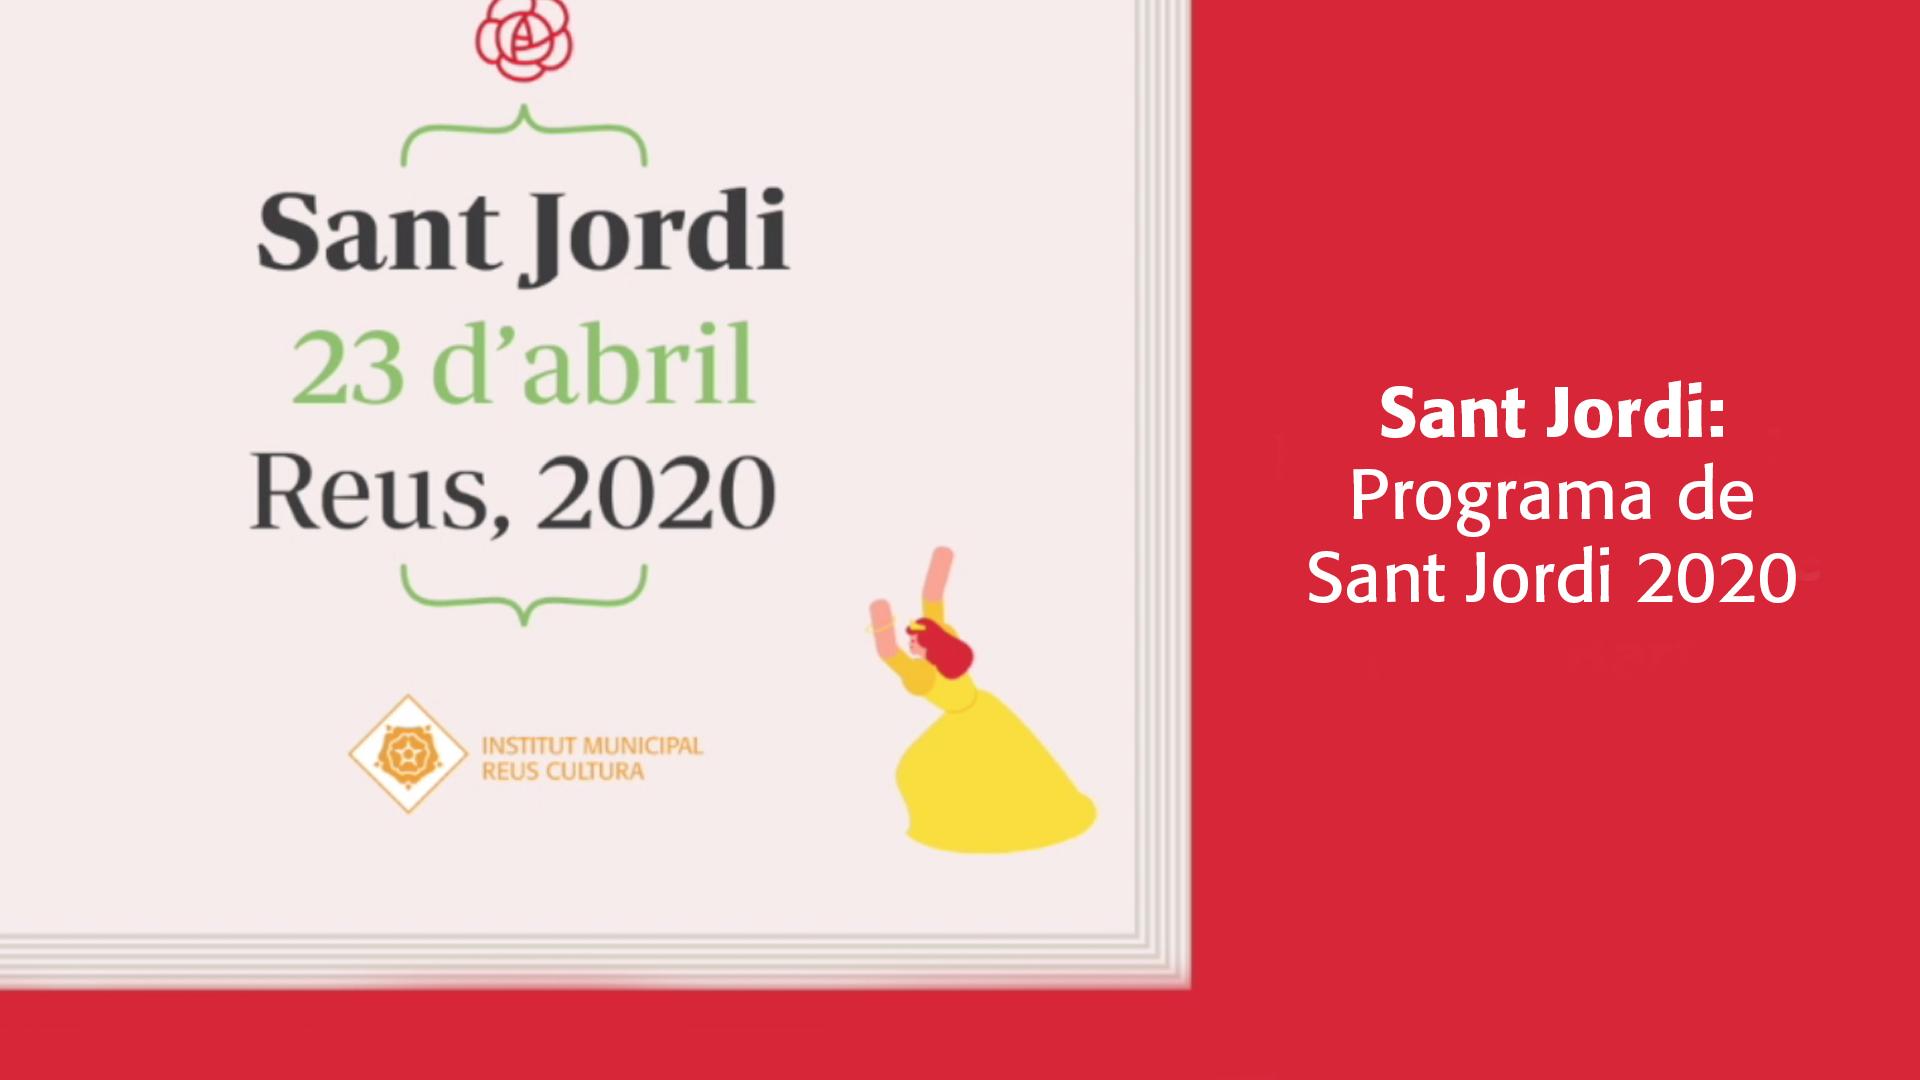 Sant Jordi: Programa de Sant Jordi 2020